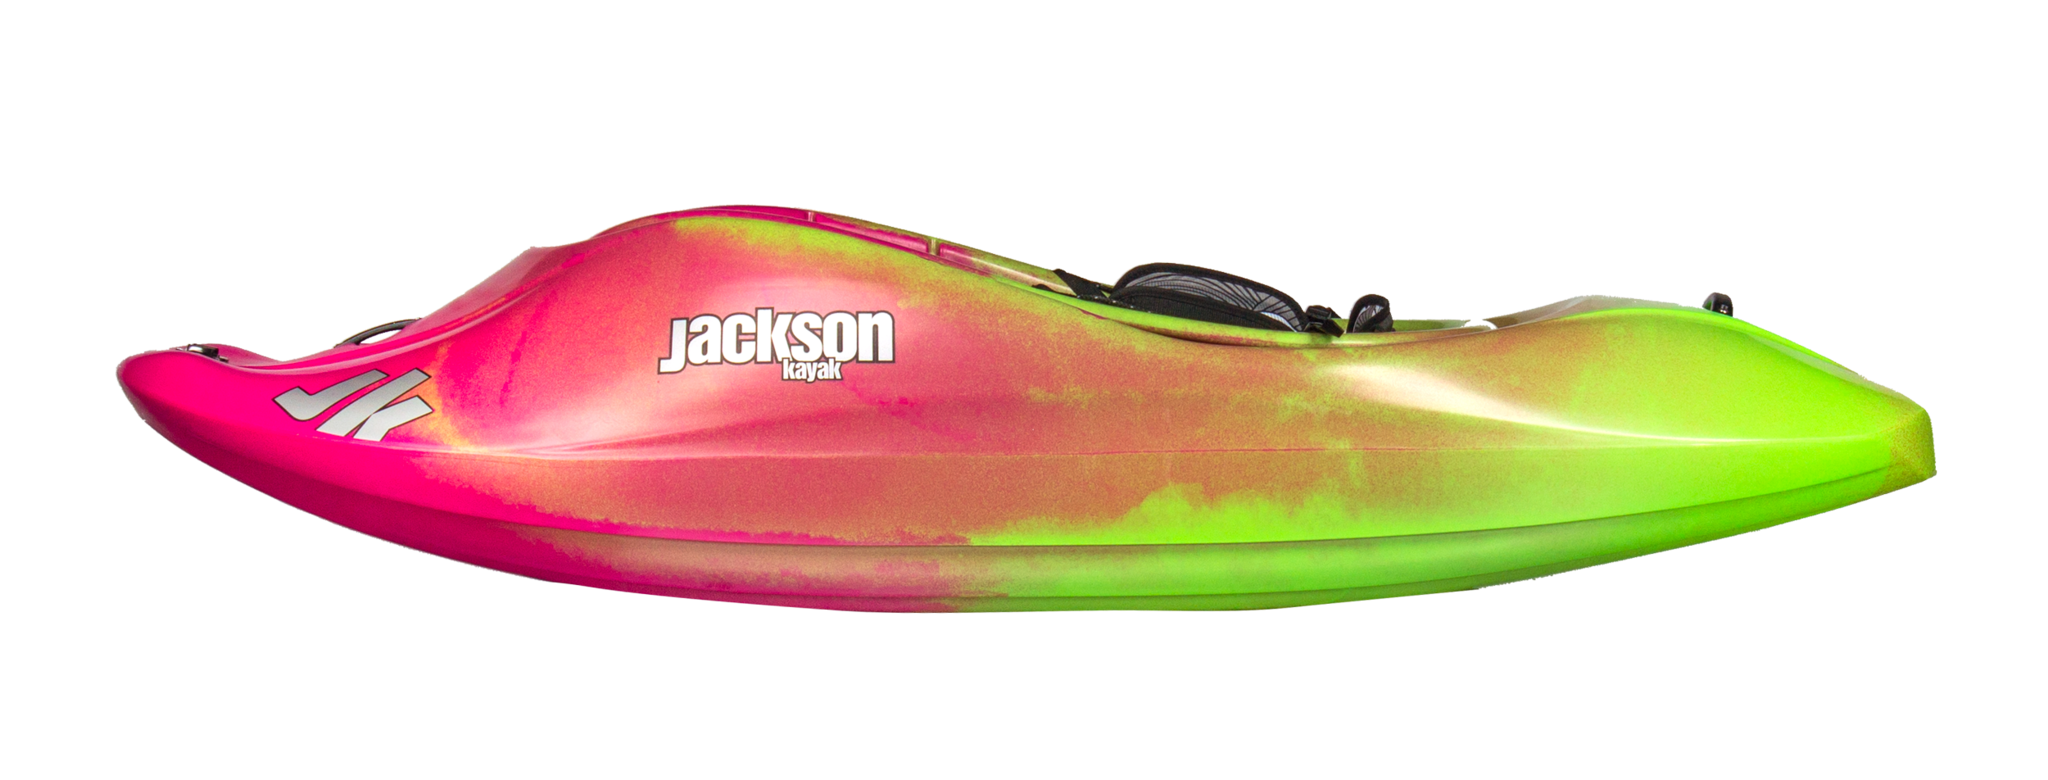 Jackson Kayak - RockStar V - SM